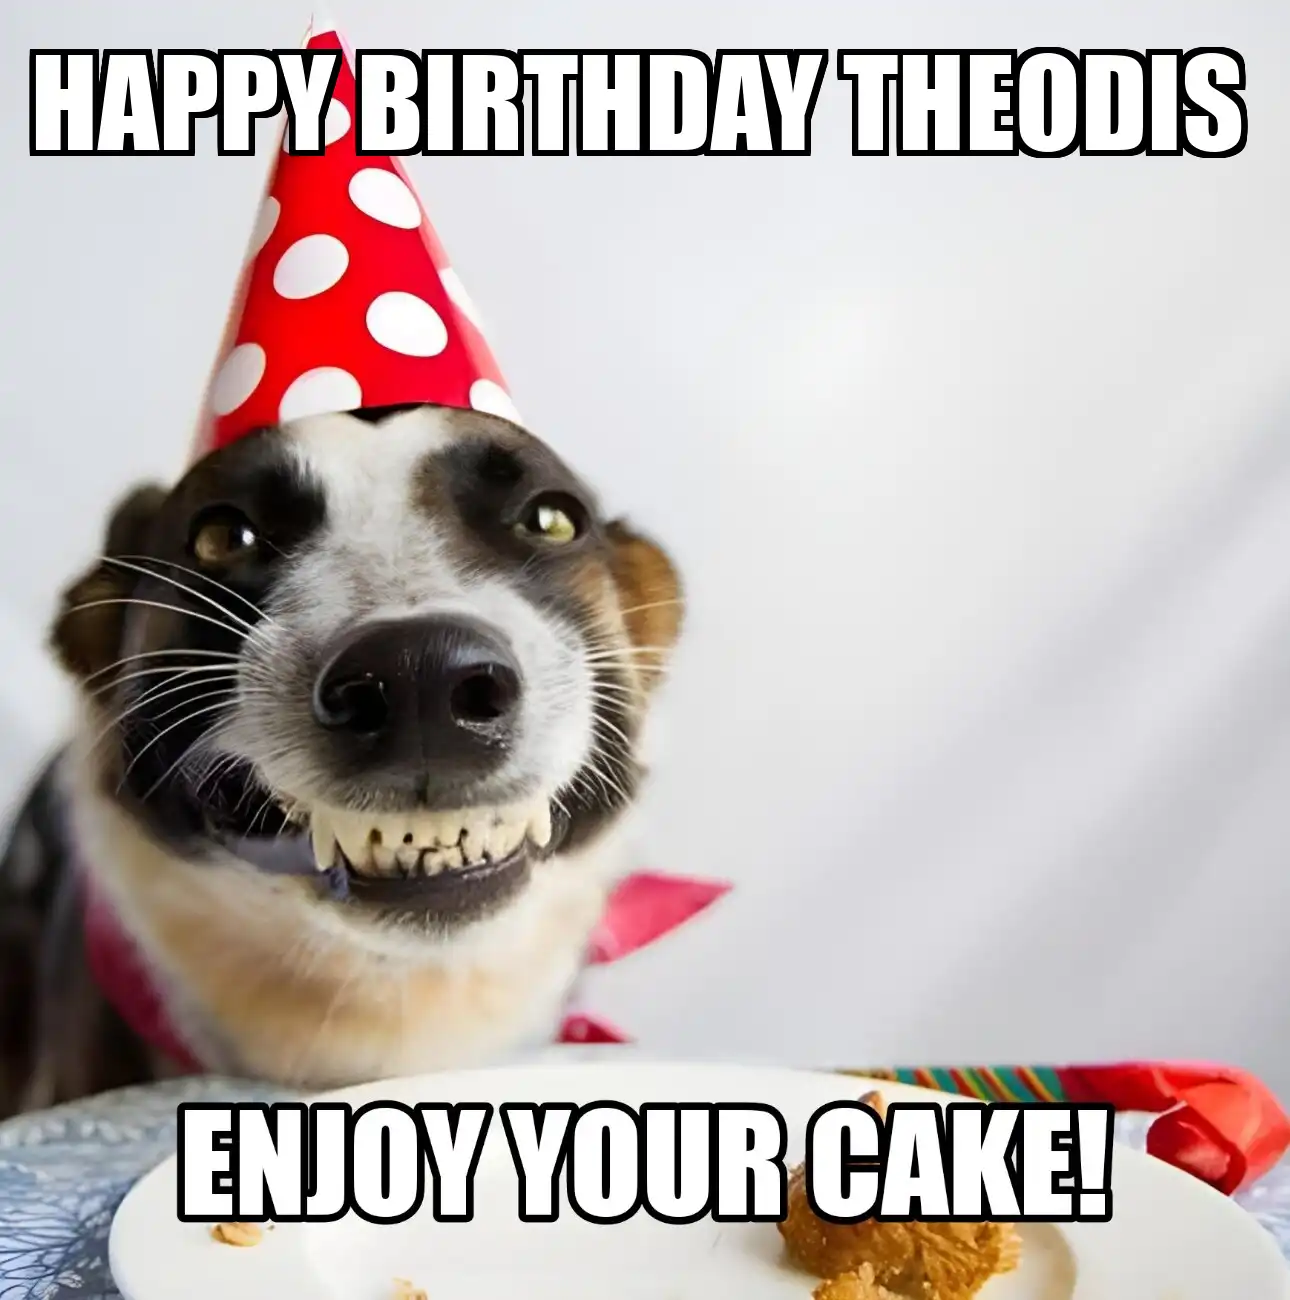 Happy Birthday Theodis Enjoy Your Cake Dog Meme